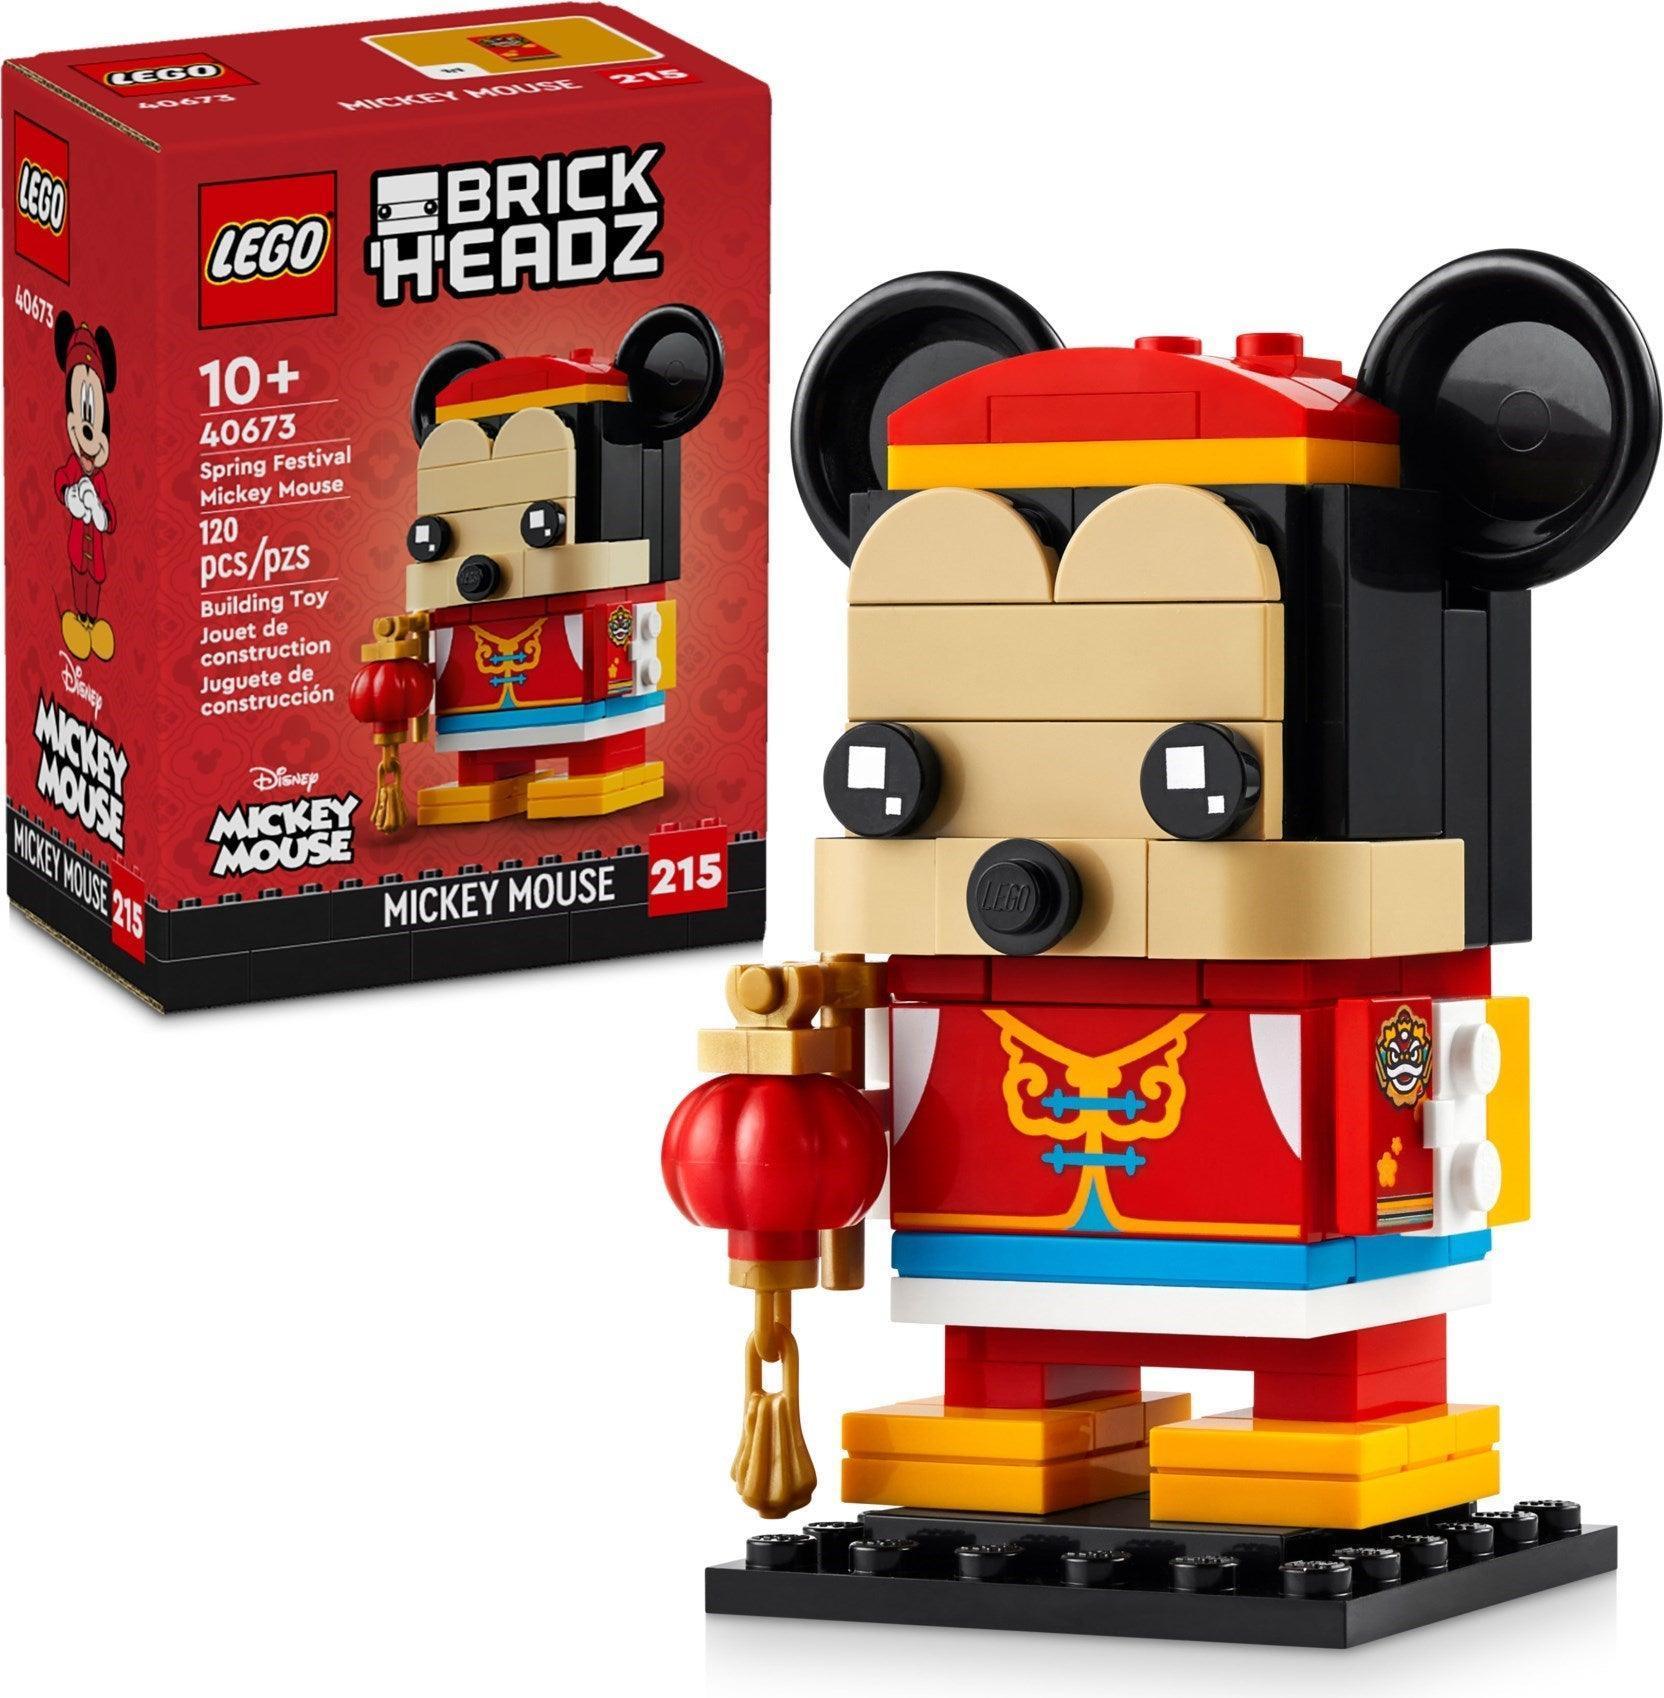 LEGO Spring Festival Mickey Mouse 40673 Brickheadz LEGO BRICKHEADZ @ 2TTOYS LEGO €. 9.99